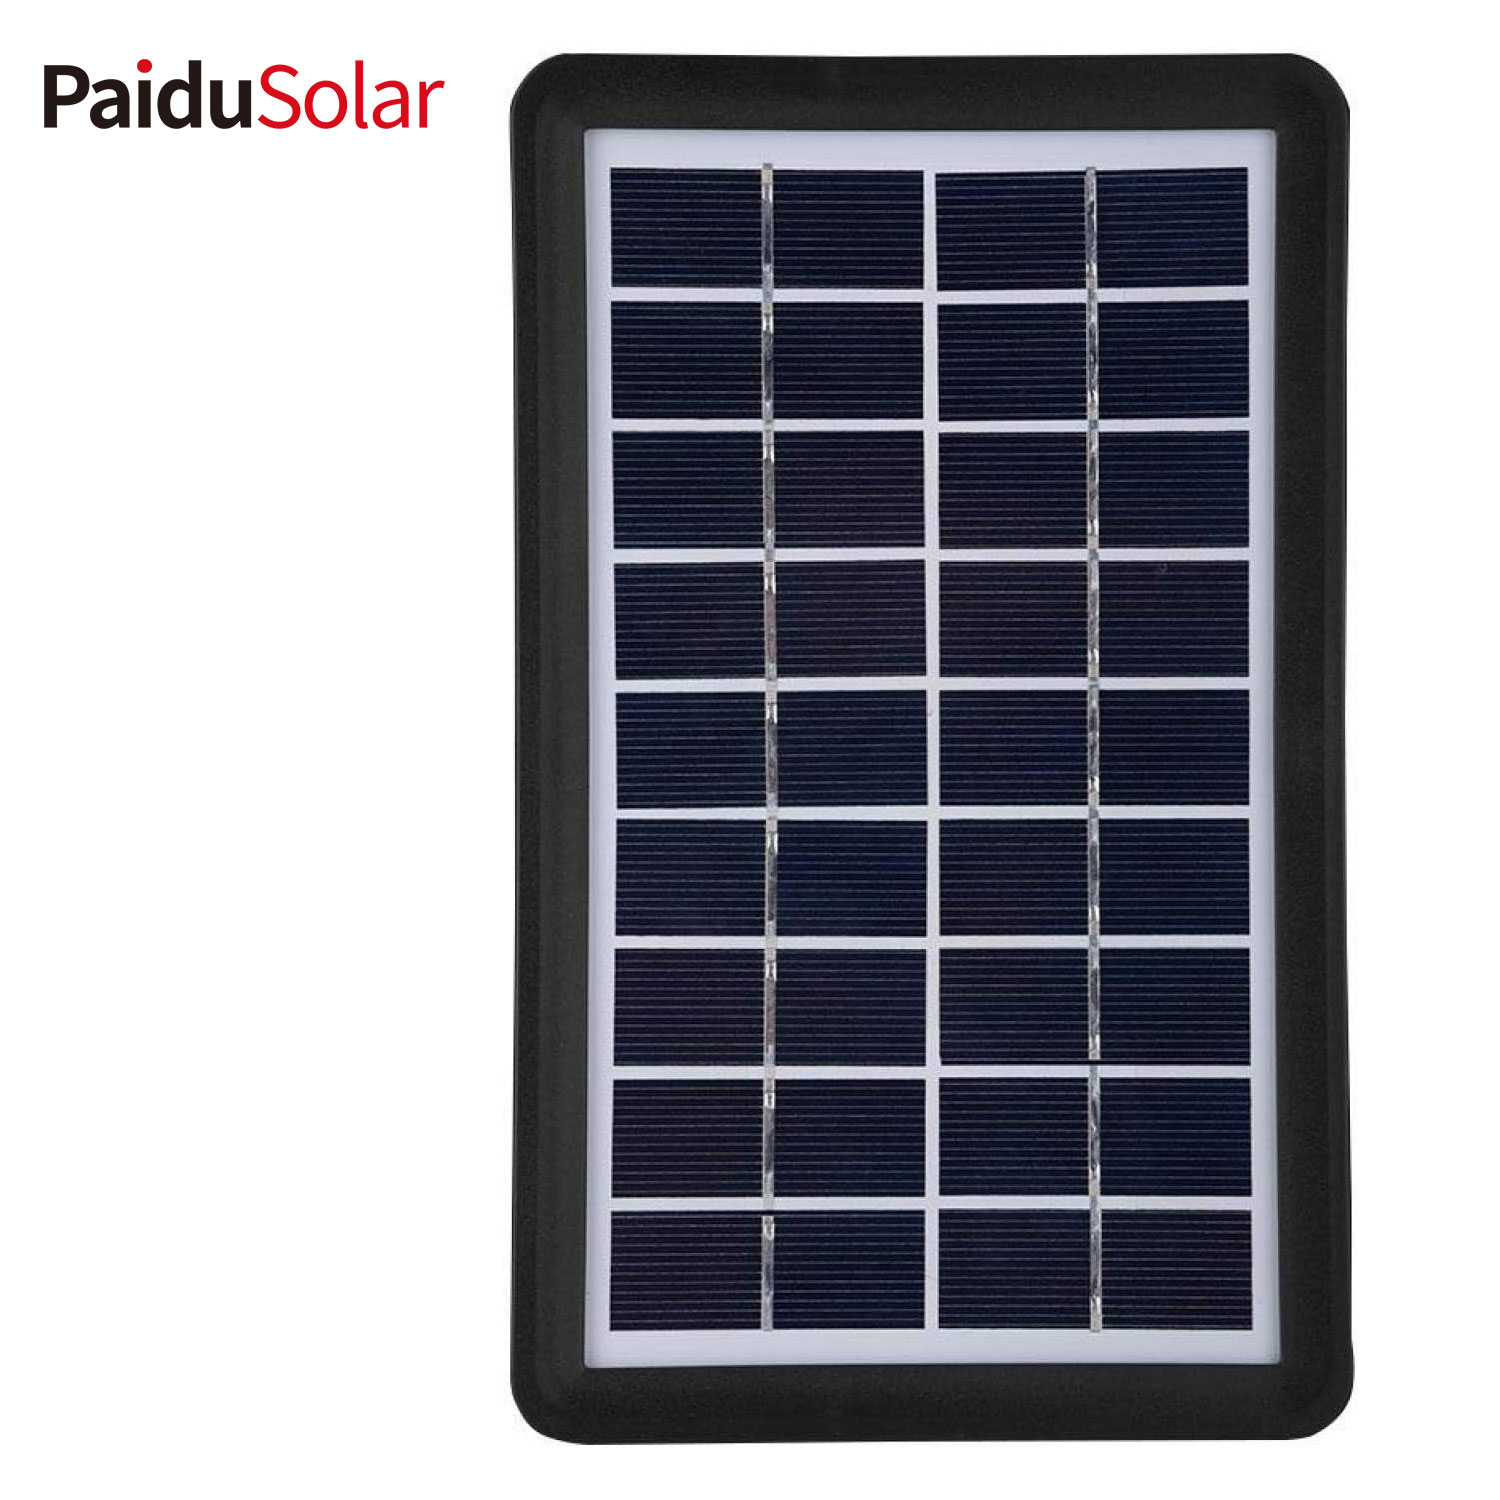 PaiduSolar 9V 3W Poly Silicon Solar Panel Solar Cell Untuk Pengisian Baterai Perahu